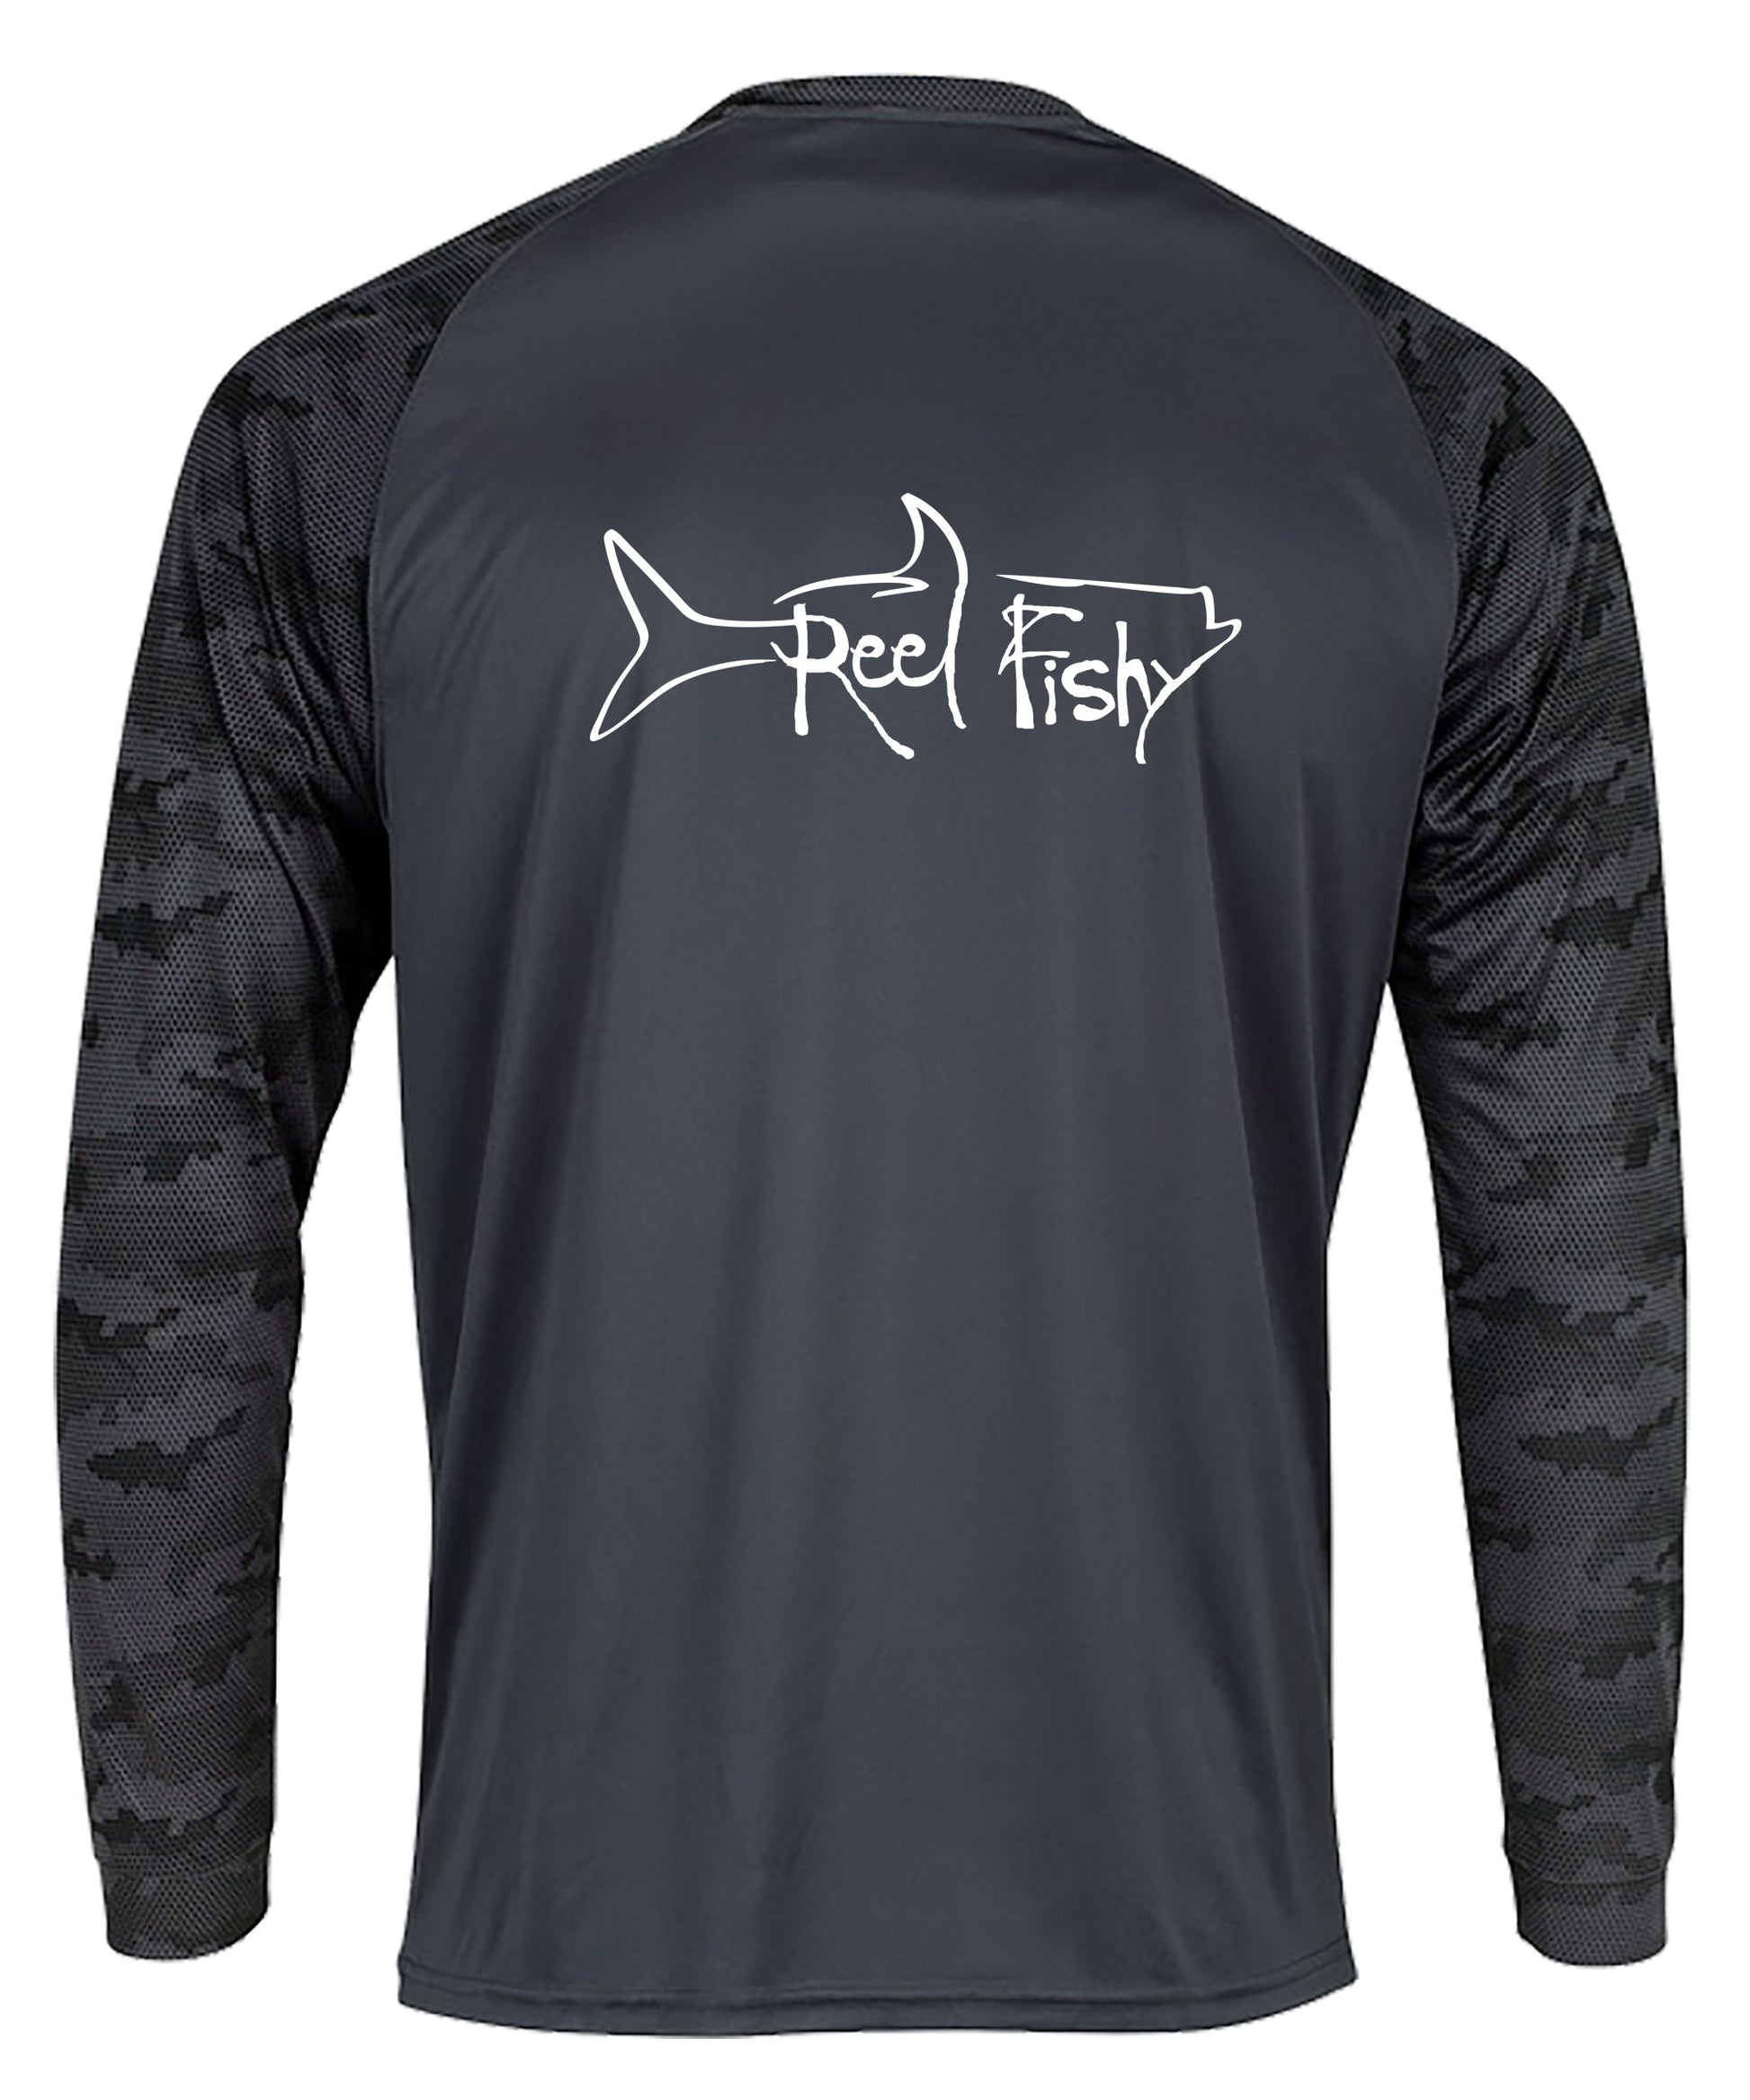 Tarpon Digital Camo Performance Dry-Fit Fishing Long Sleeve Shirts with 50+ UPF Sun Protection - Graphite